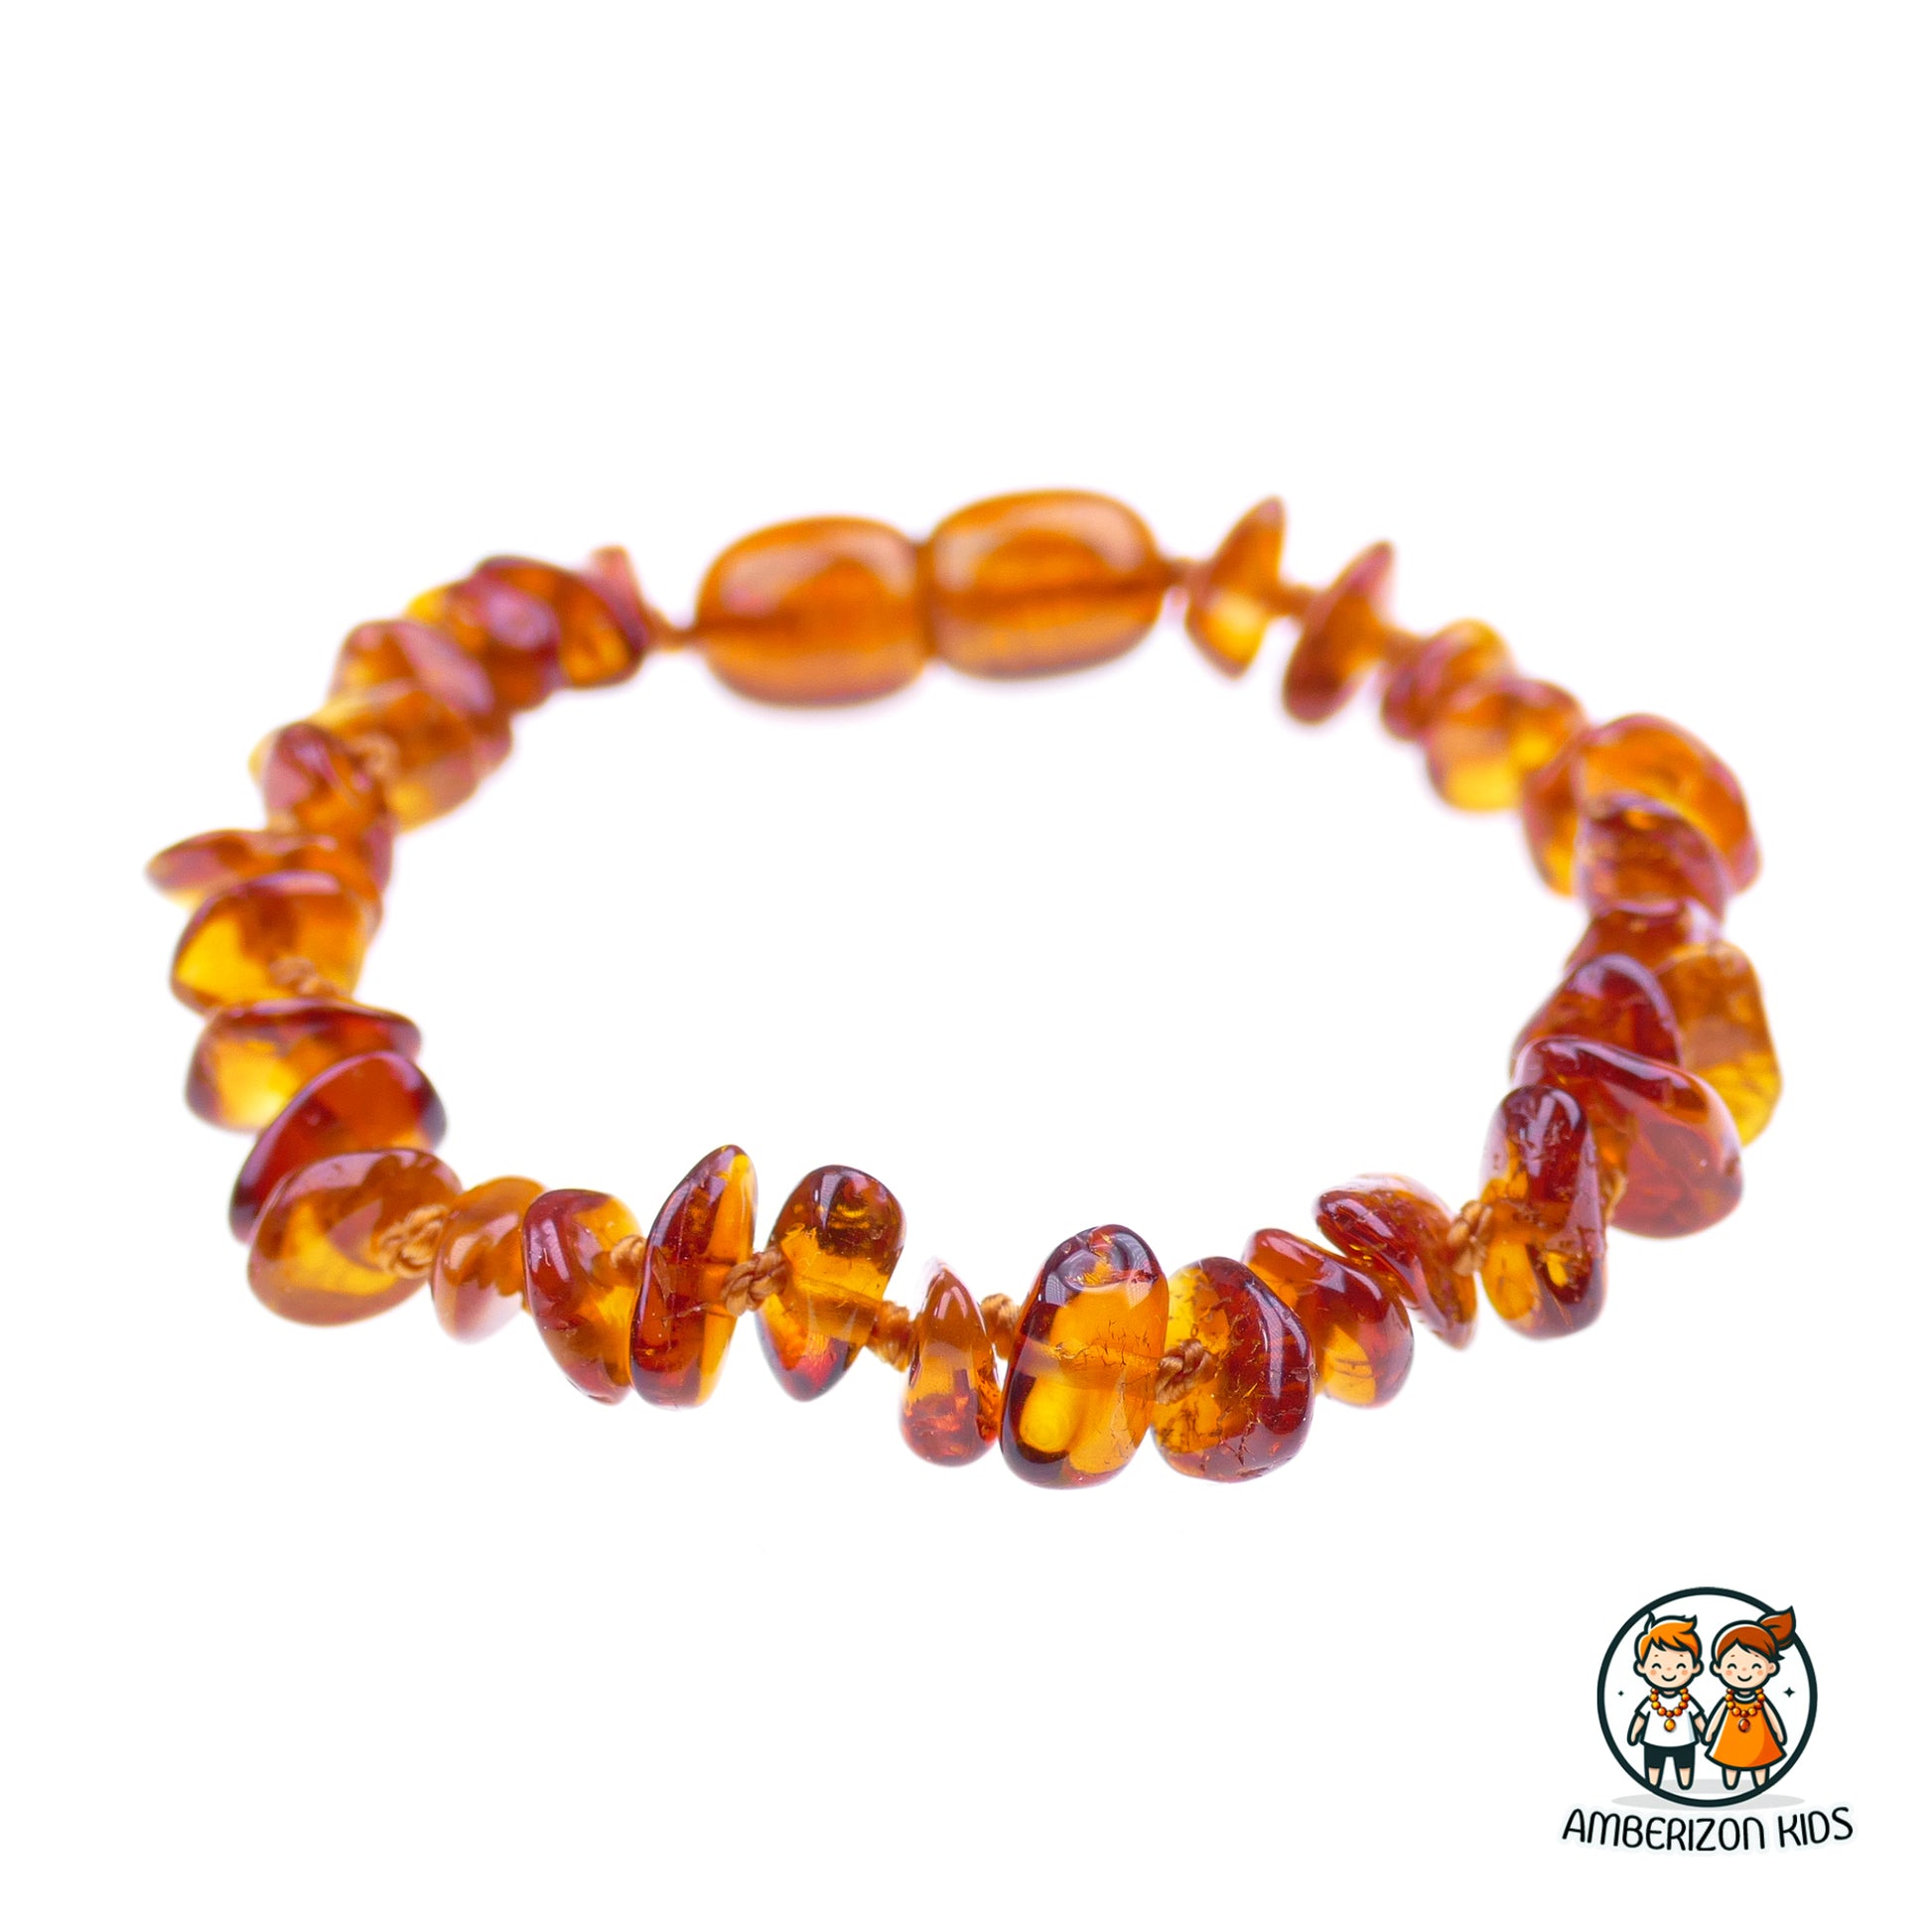 Cognac color amber baby bracelet-anklet - Smooth clear translucent beads